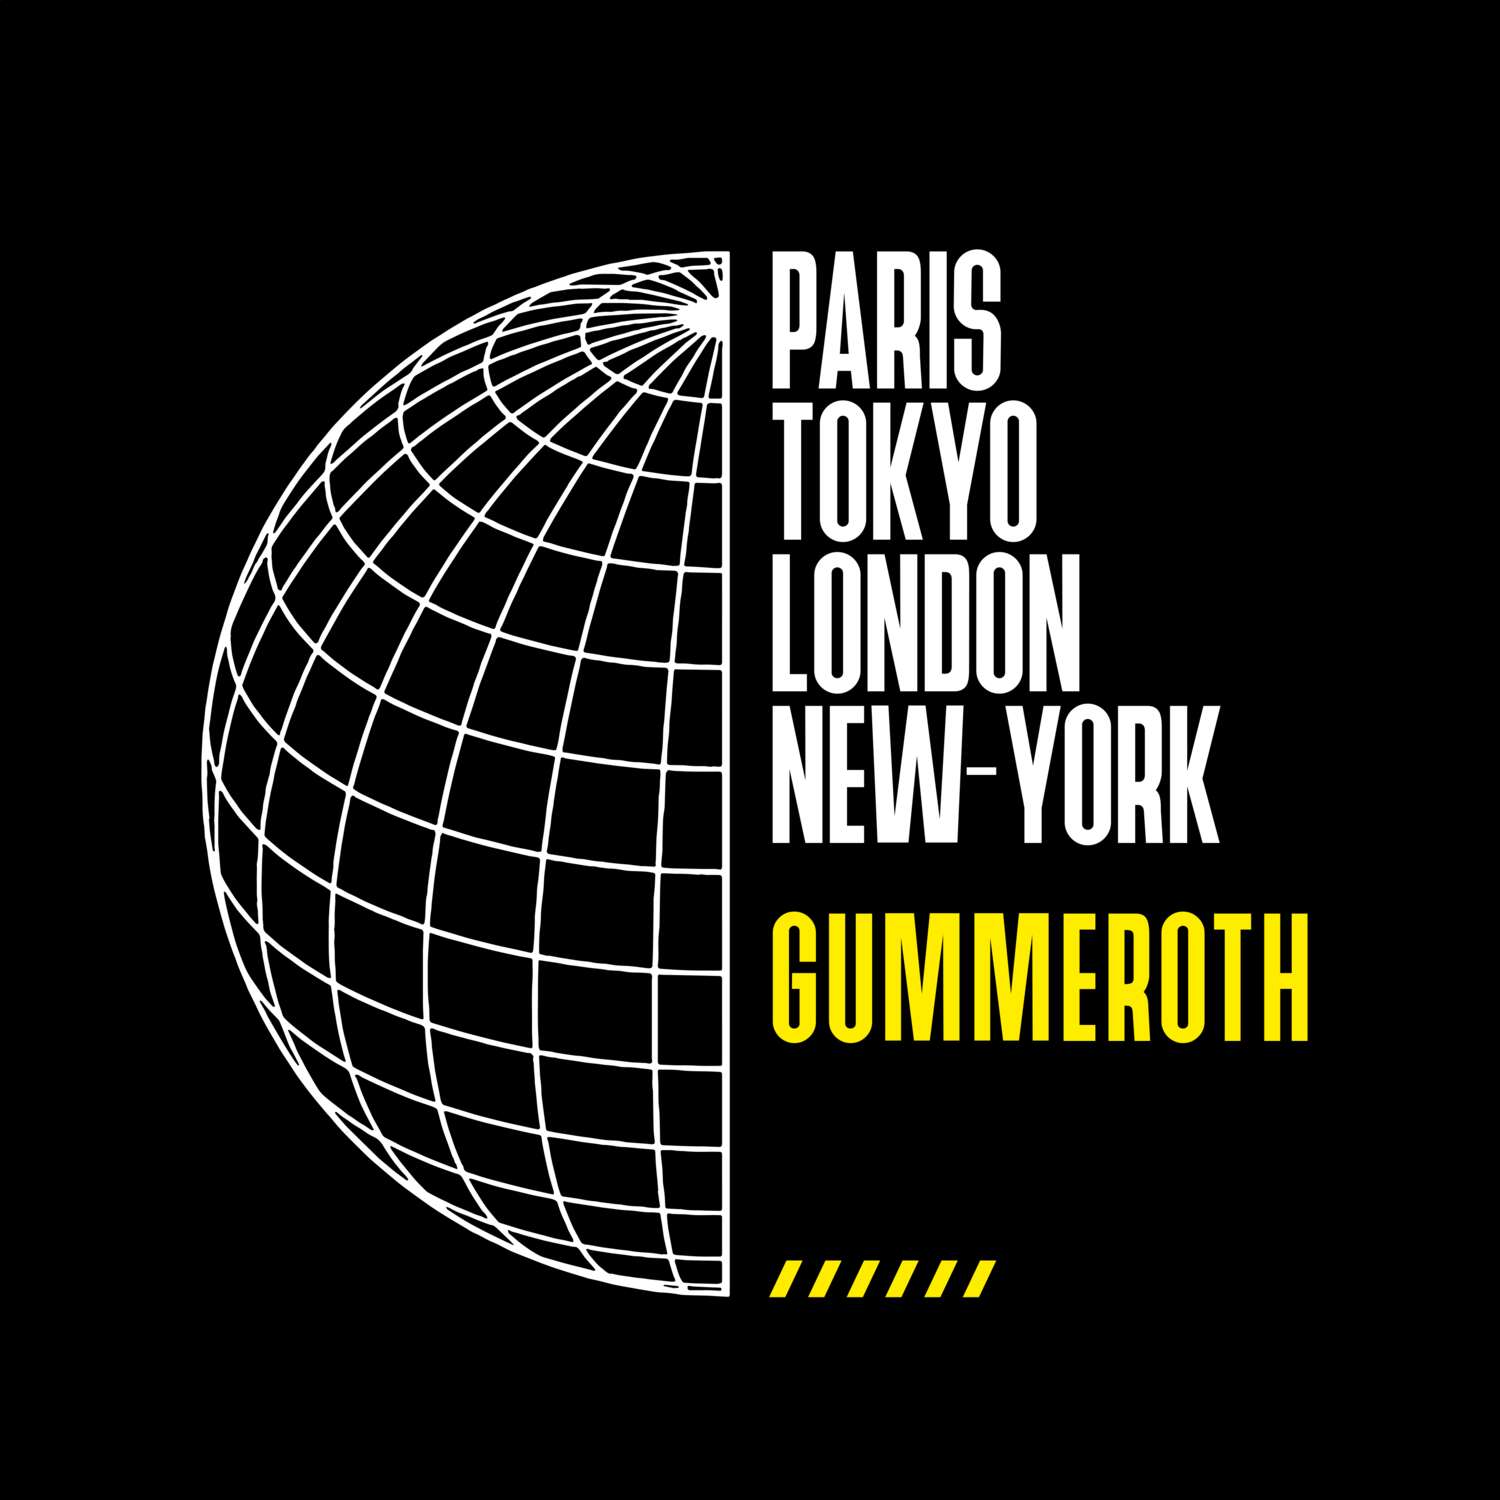 Gummeroth T-Shirt »Paris Tokyo London«